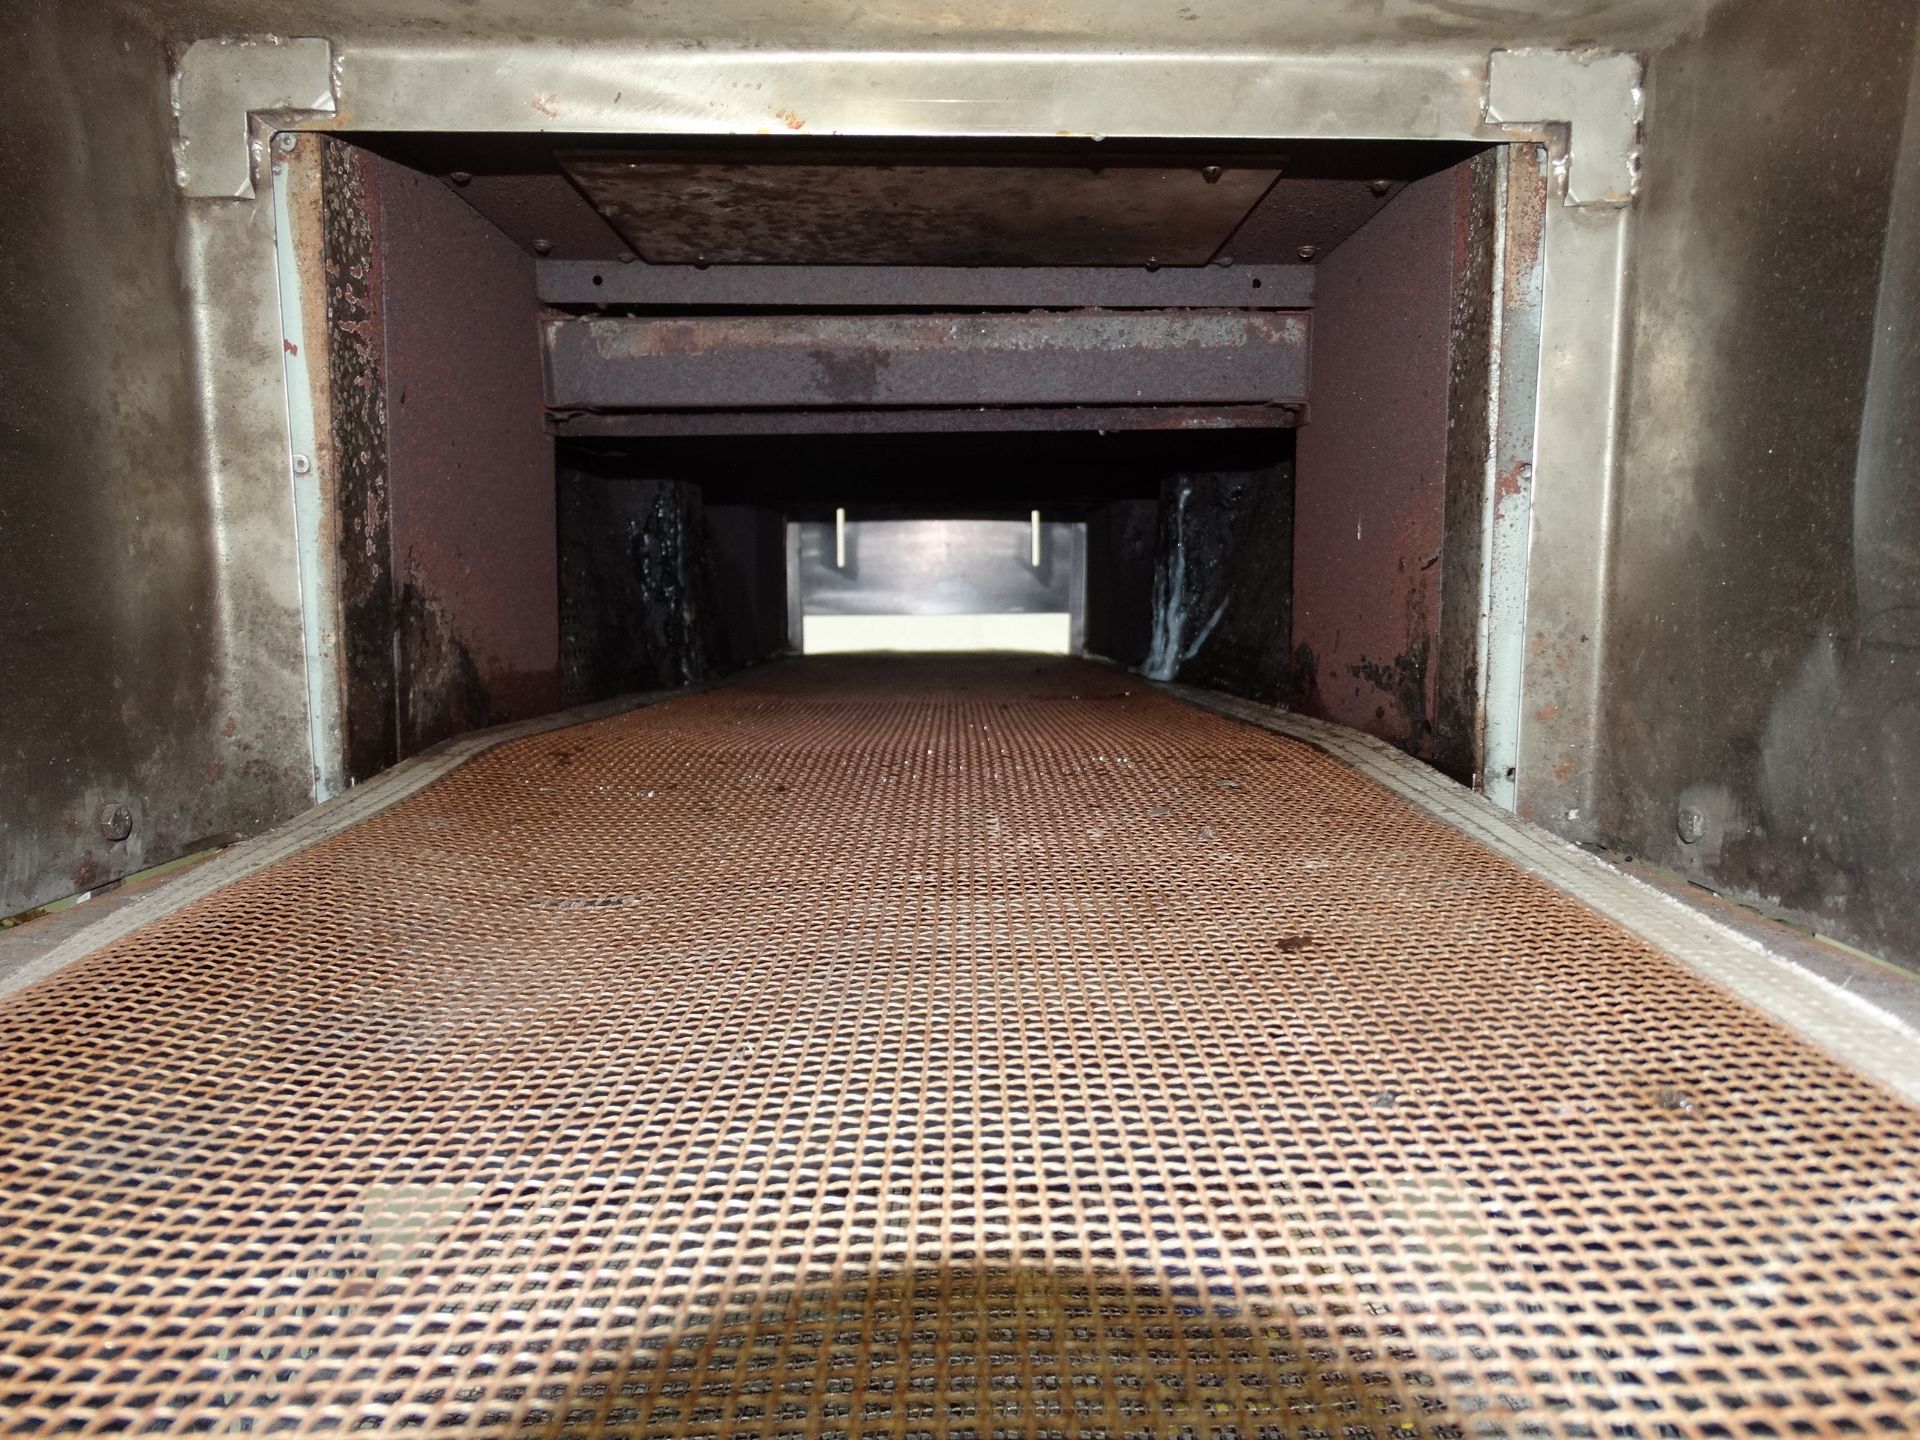 Shanklin 19" Wide x 7" Tall Heat Shrink Tunnel B5314 - Image 9 of 14